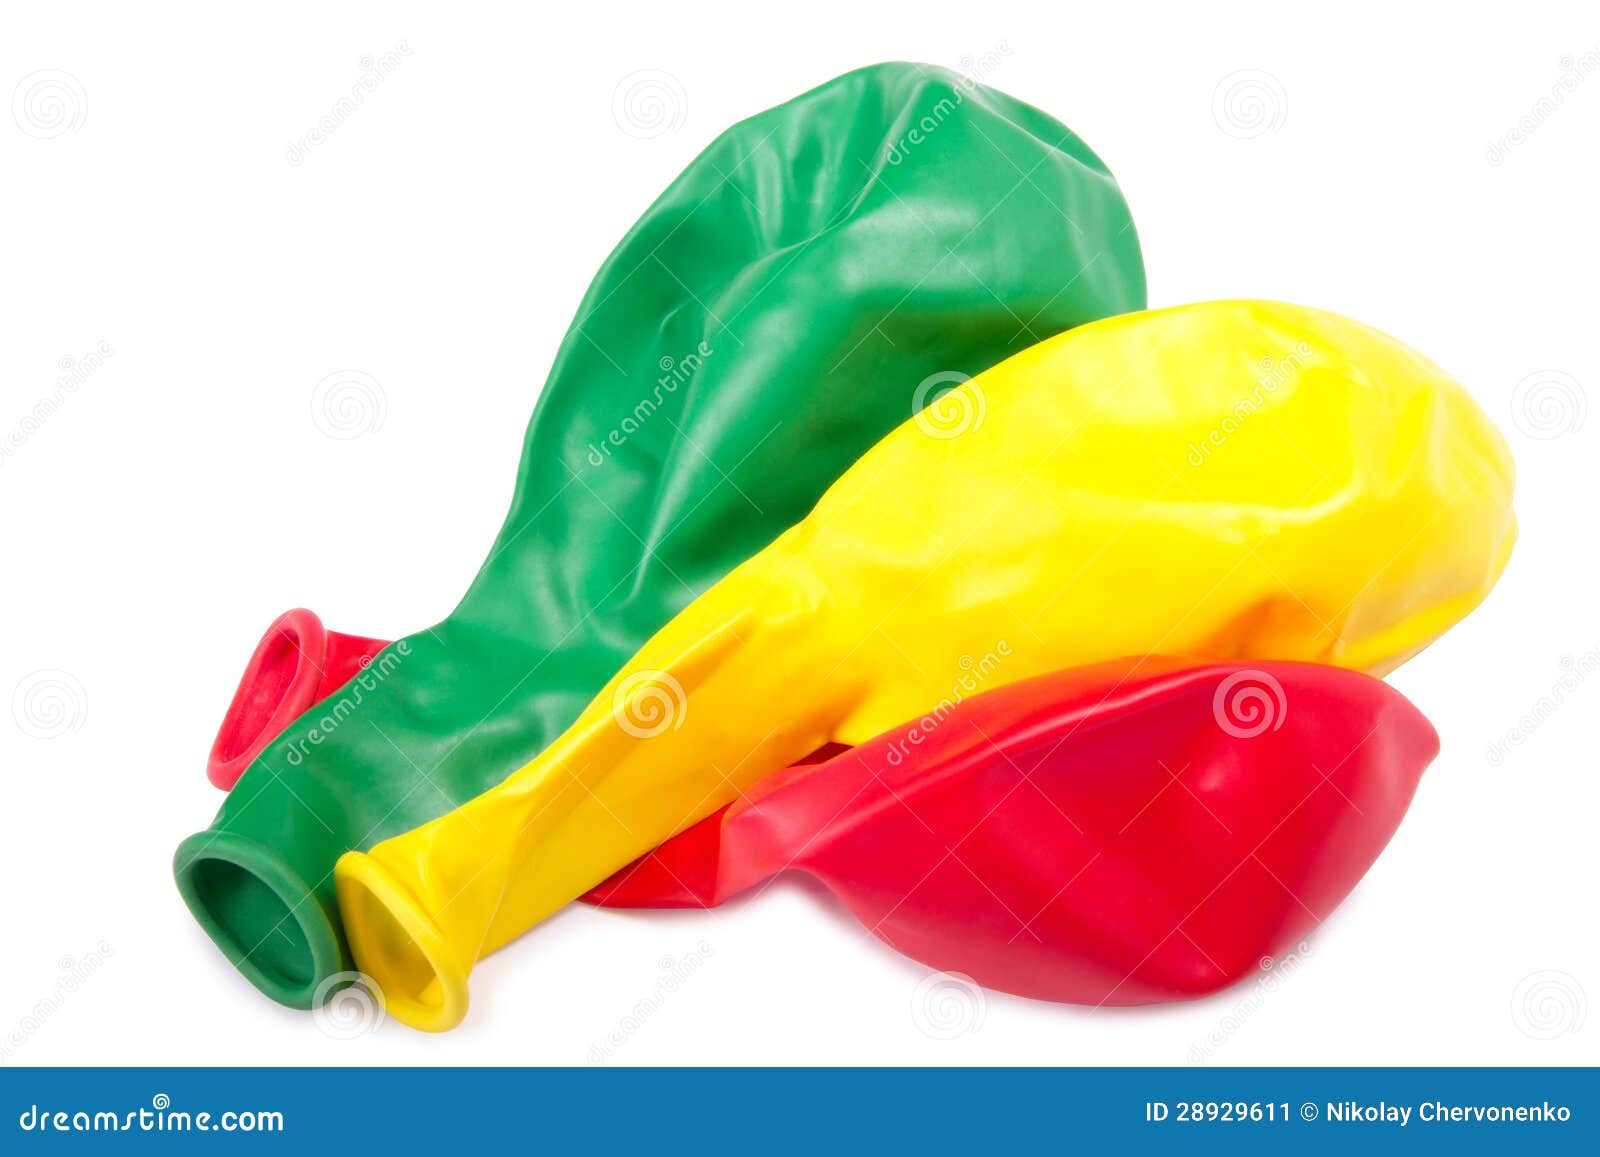 Three deflated balloon stock image. Image of play, holiday - 28929611